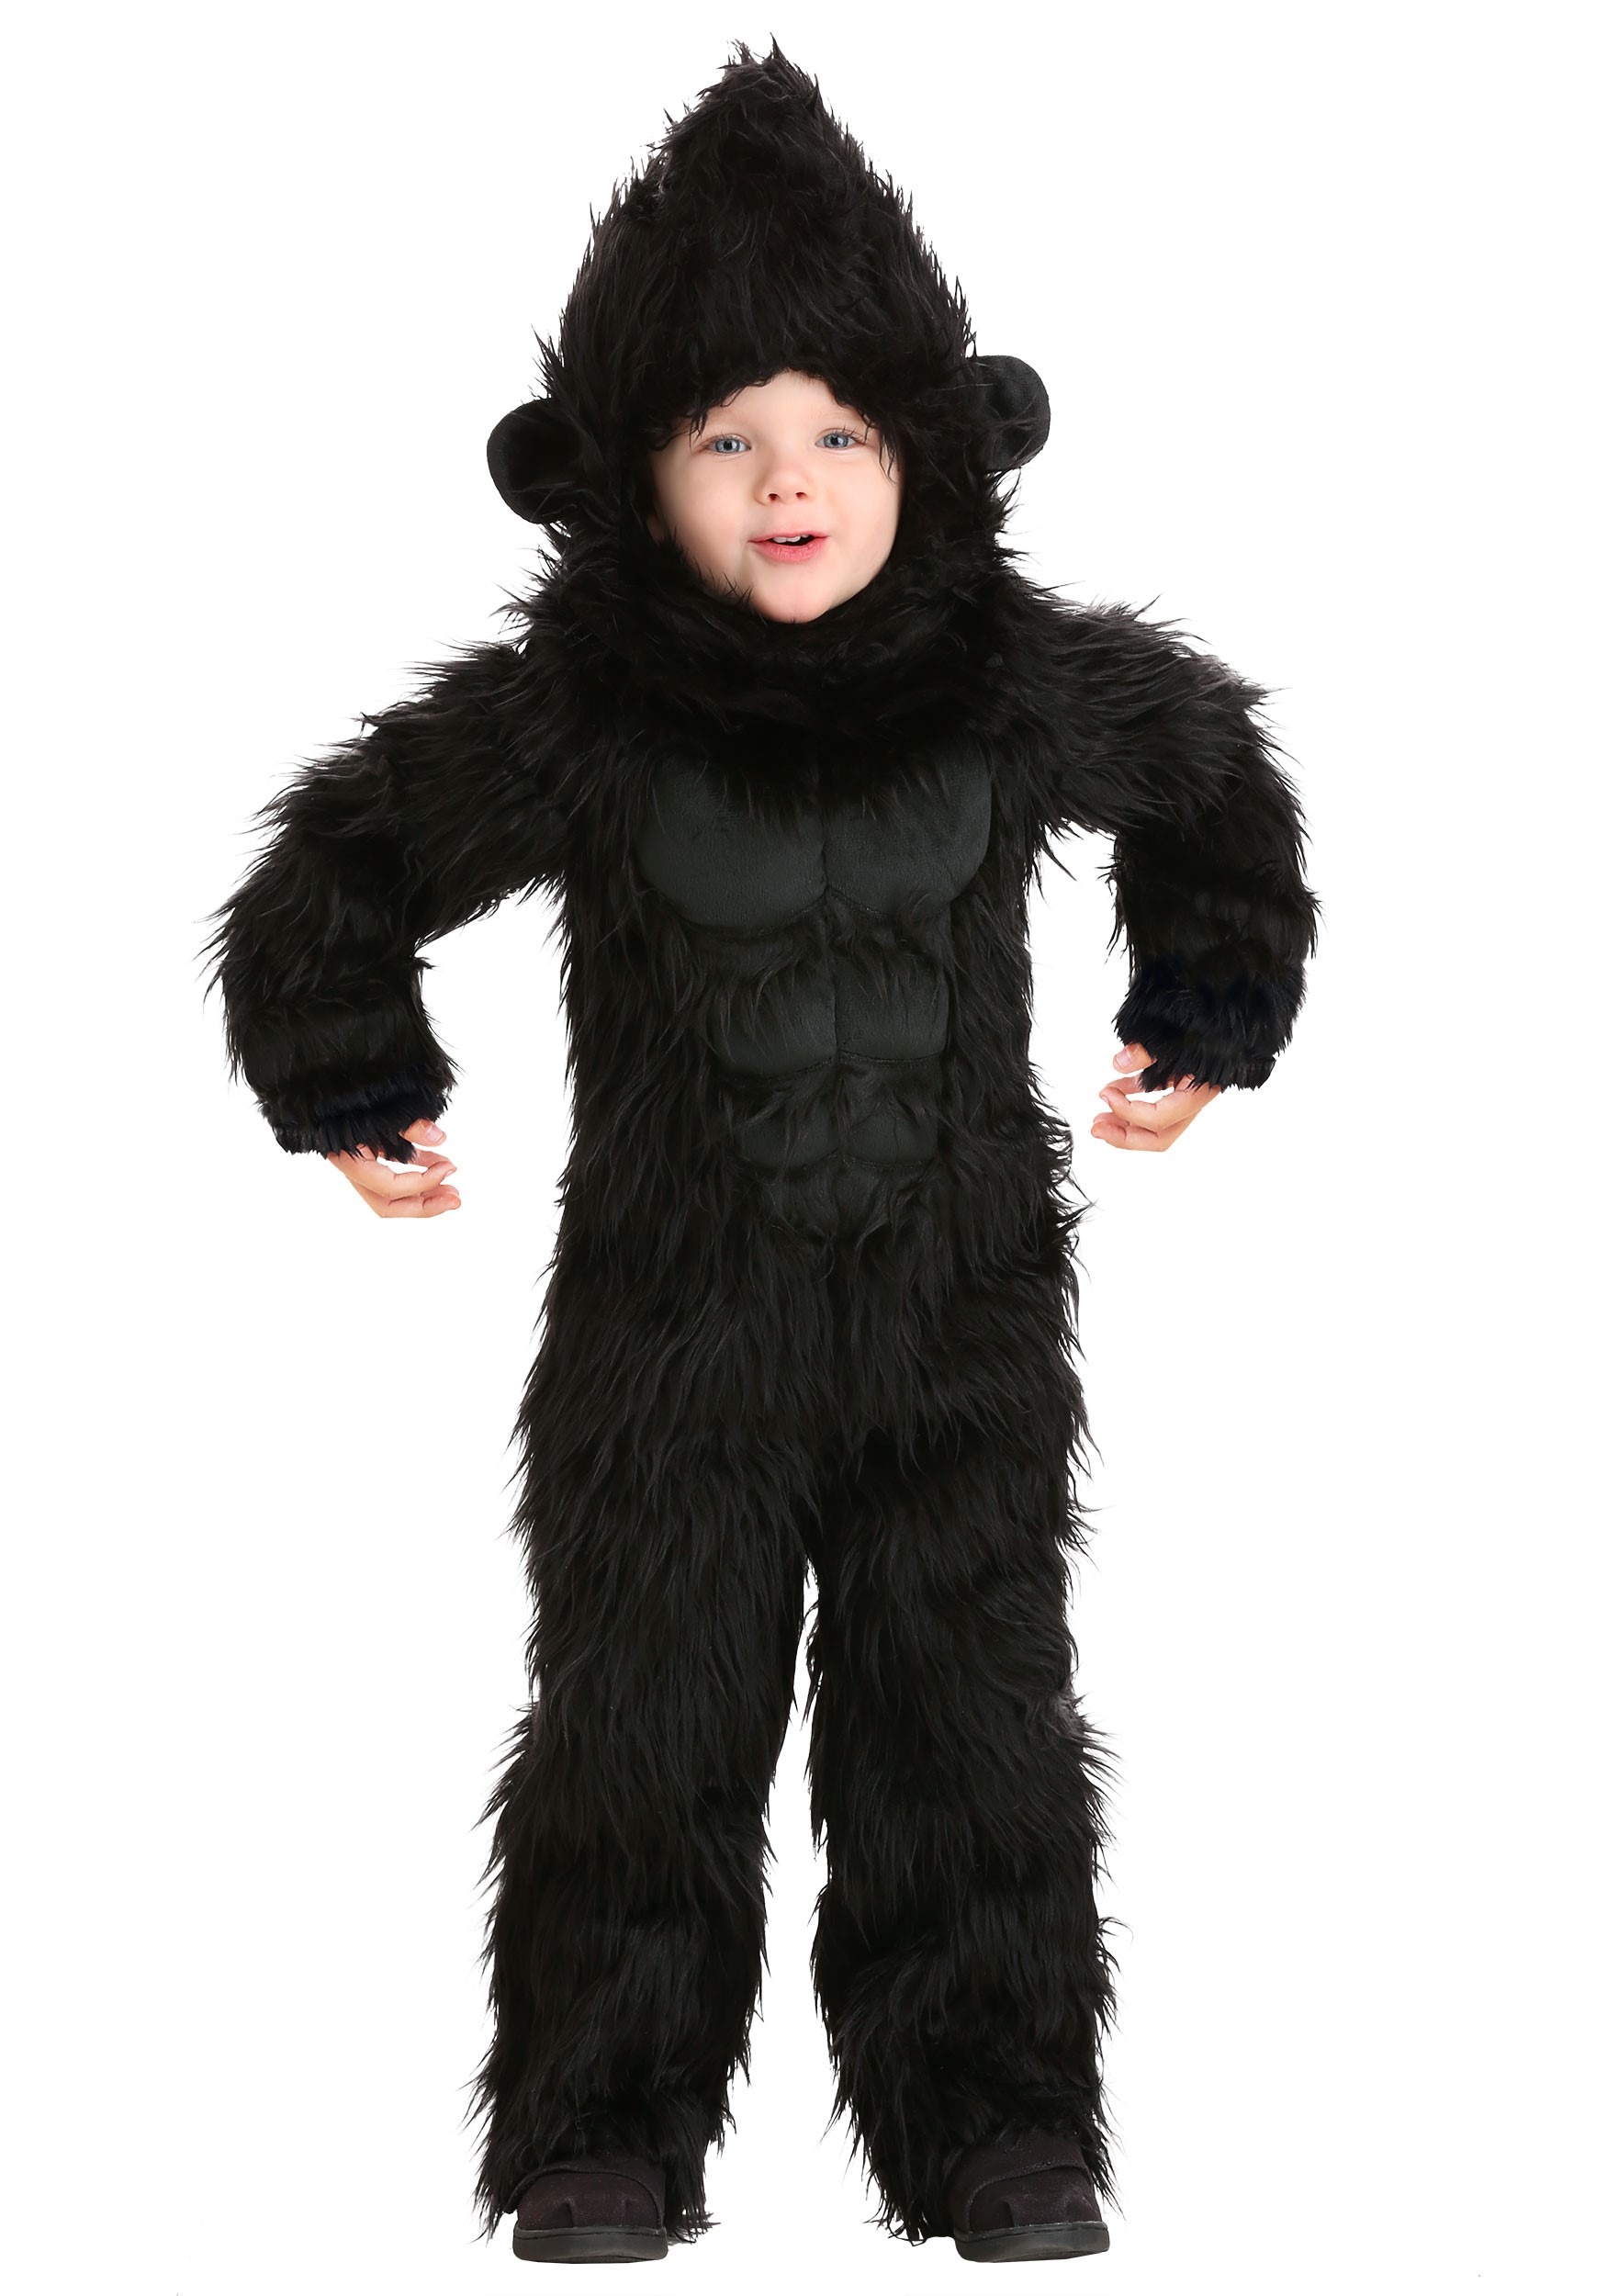 Photos - Fancy Dress FUN Costumes Gorilla Toddler Costume Black FUN6469TD